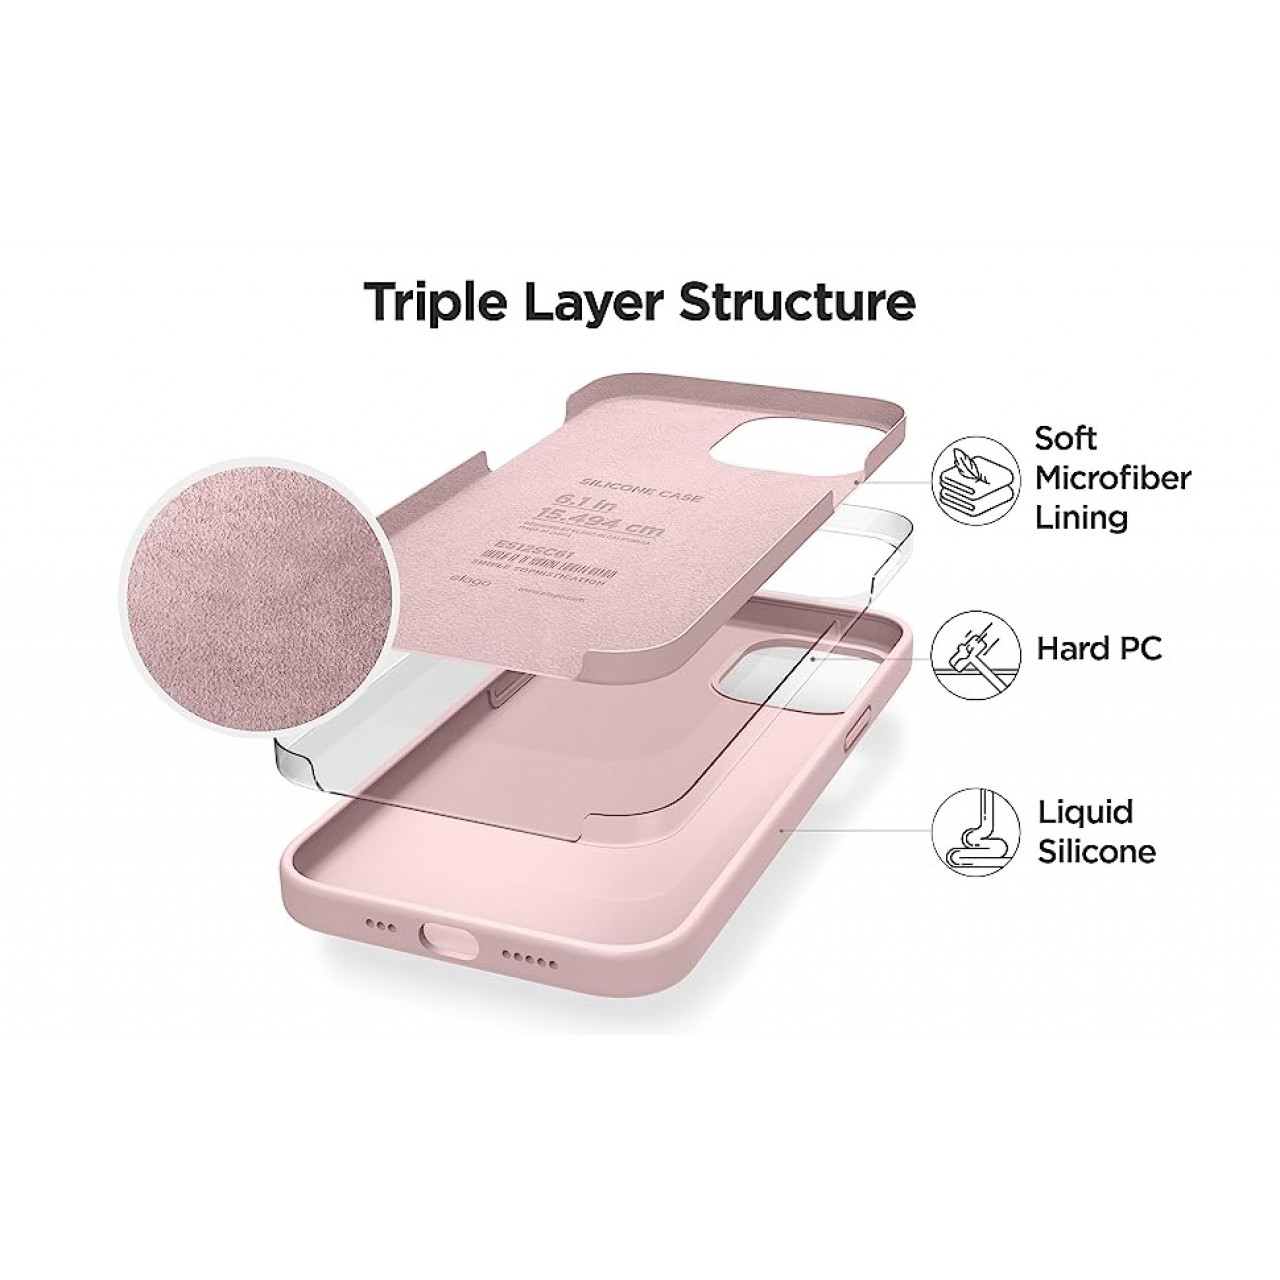 iPhone 12 Pro Max Θήκη Σιλικόνης - Back Case Silicone Pink Sand